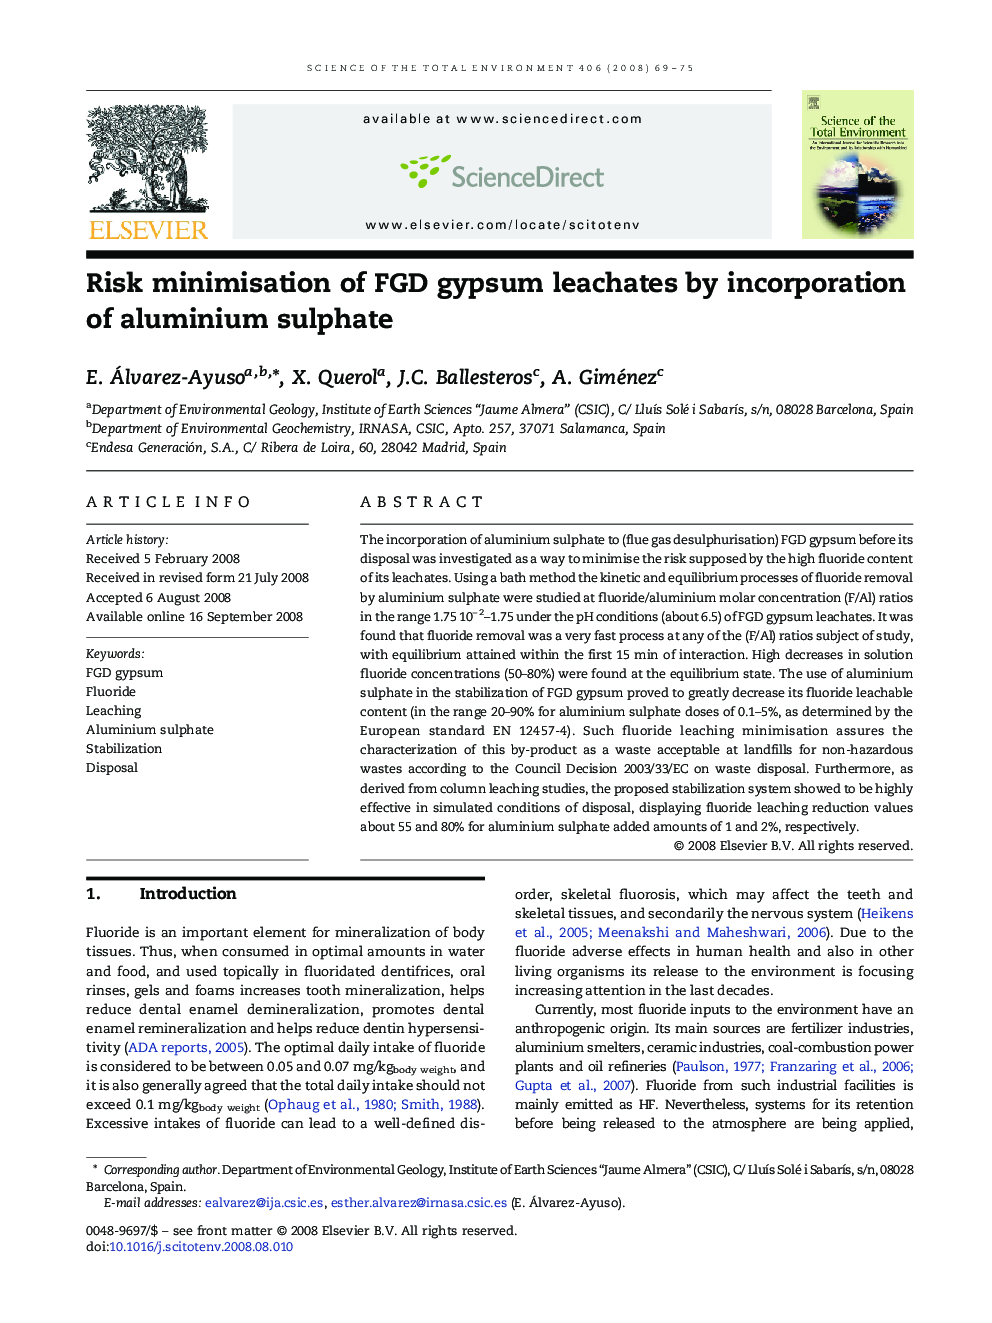 Risk minimisation of FGD gypsum leachates by incorporation of aluminium sulphate